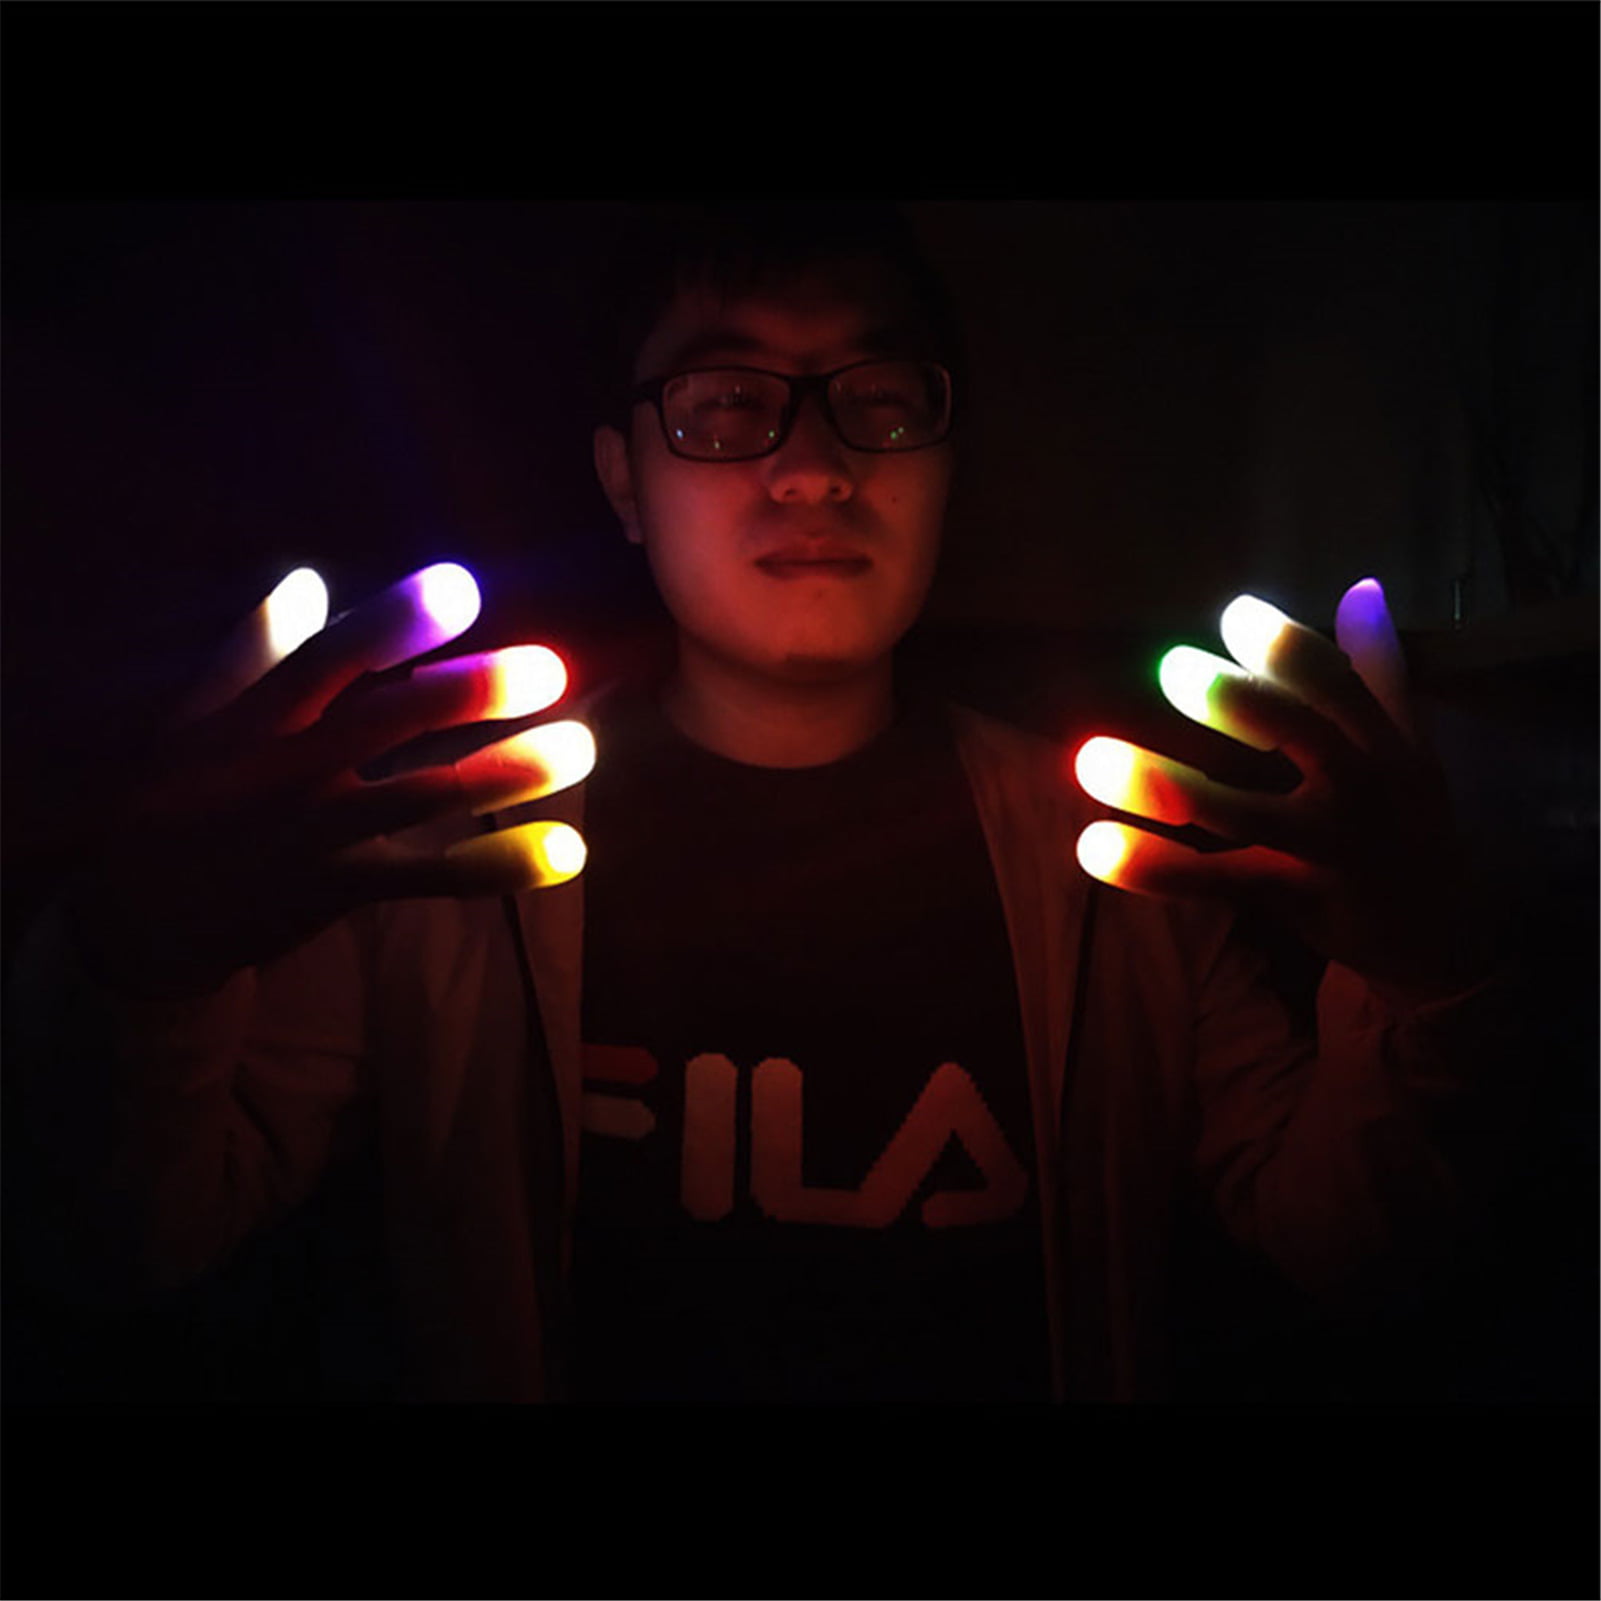 4PCS LED Thumb Light Soft Magic Light up Finger Magic Trick Dance Fake Finger Magic Prop for Performance